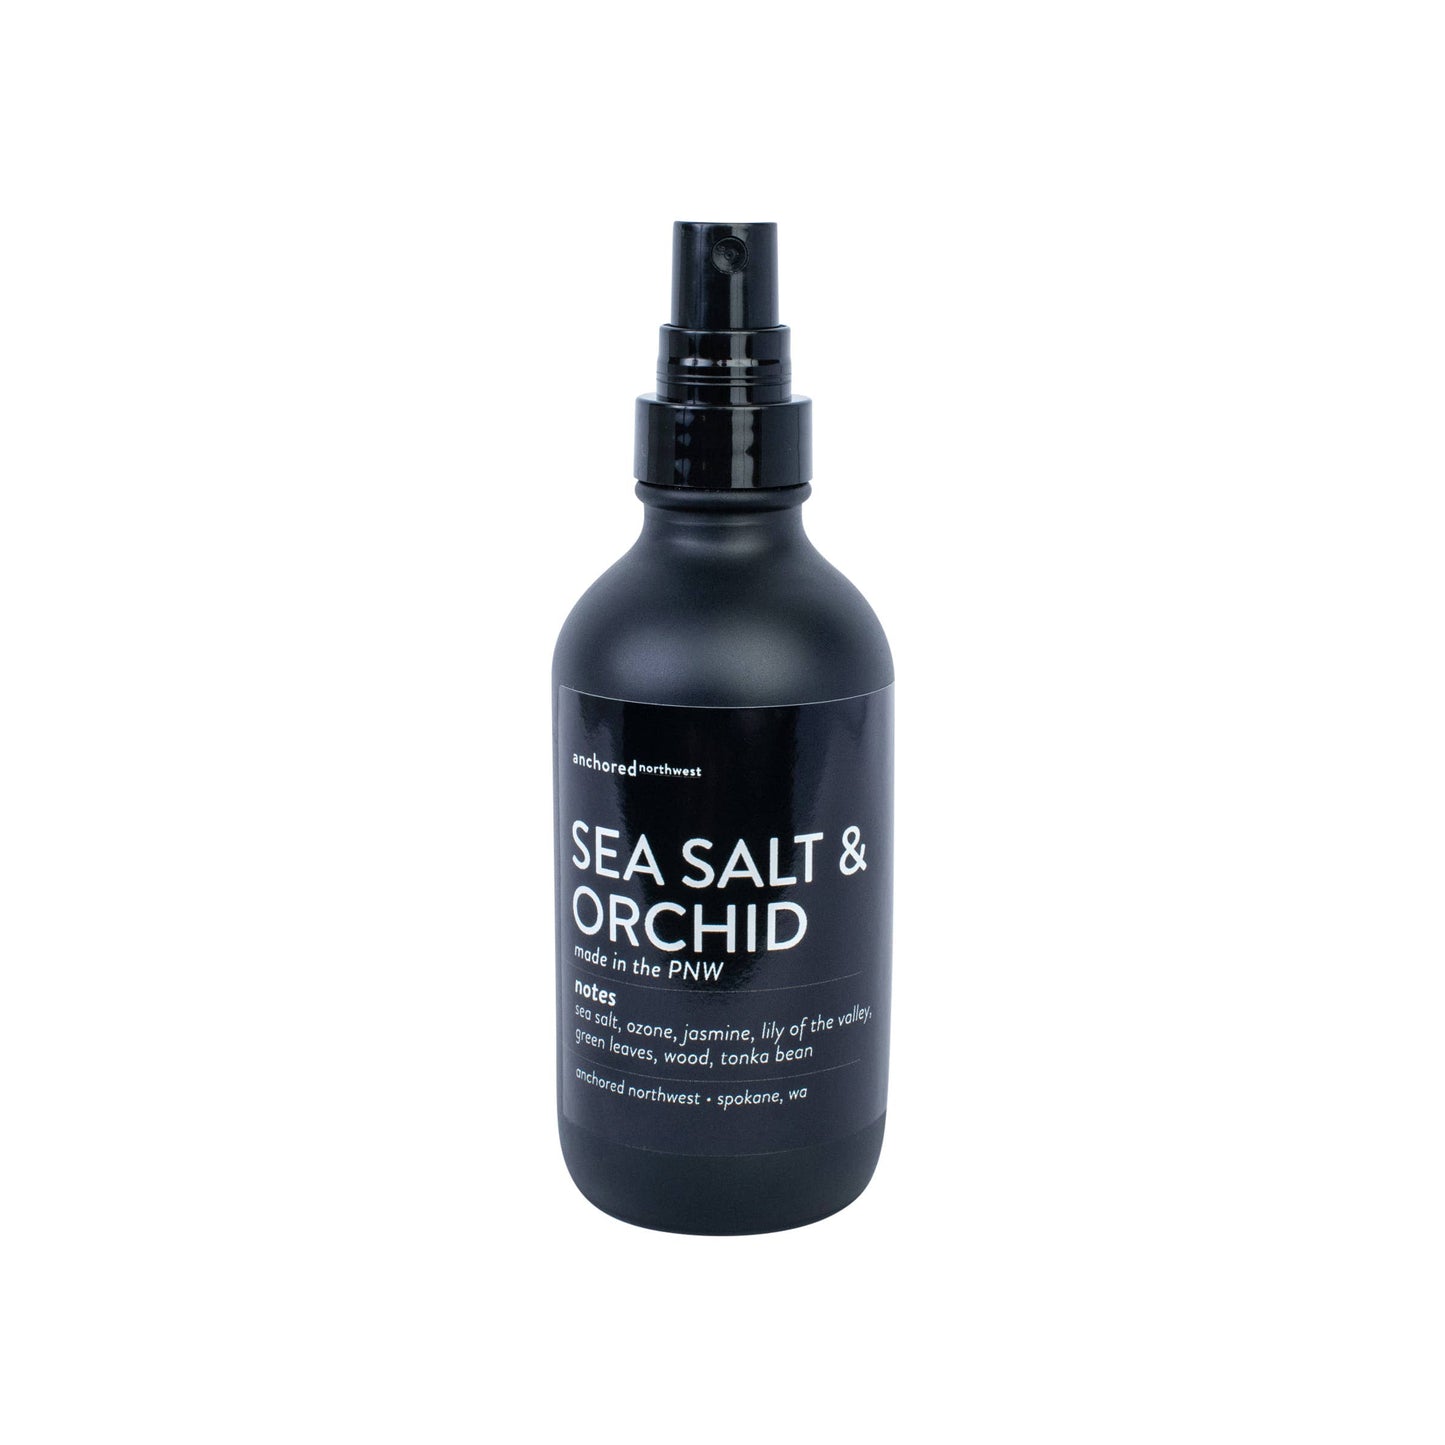 Anchored Northwest - Sea Salt & Orchid Room & Linen Spray: 4oz